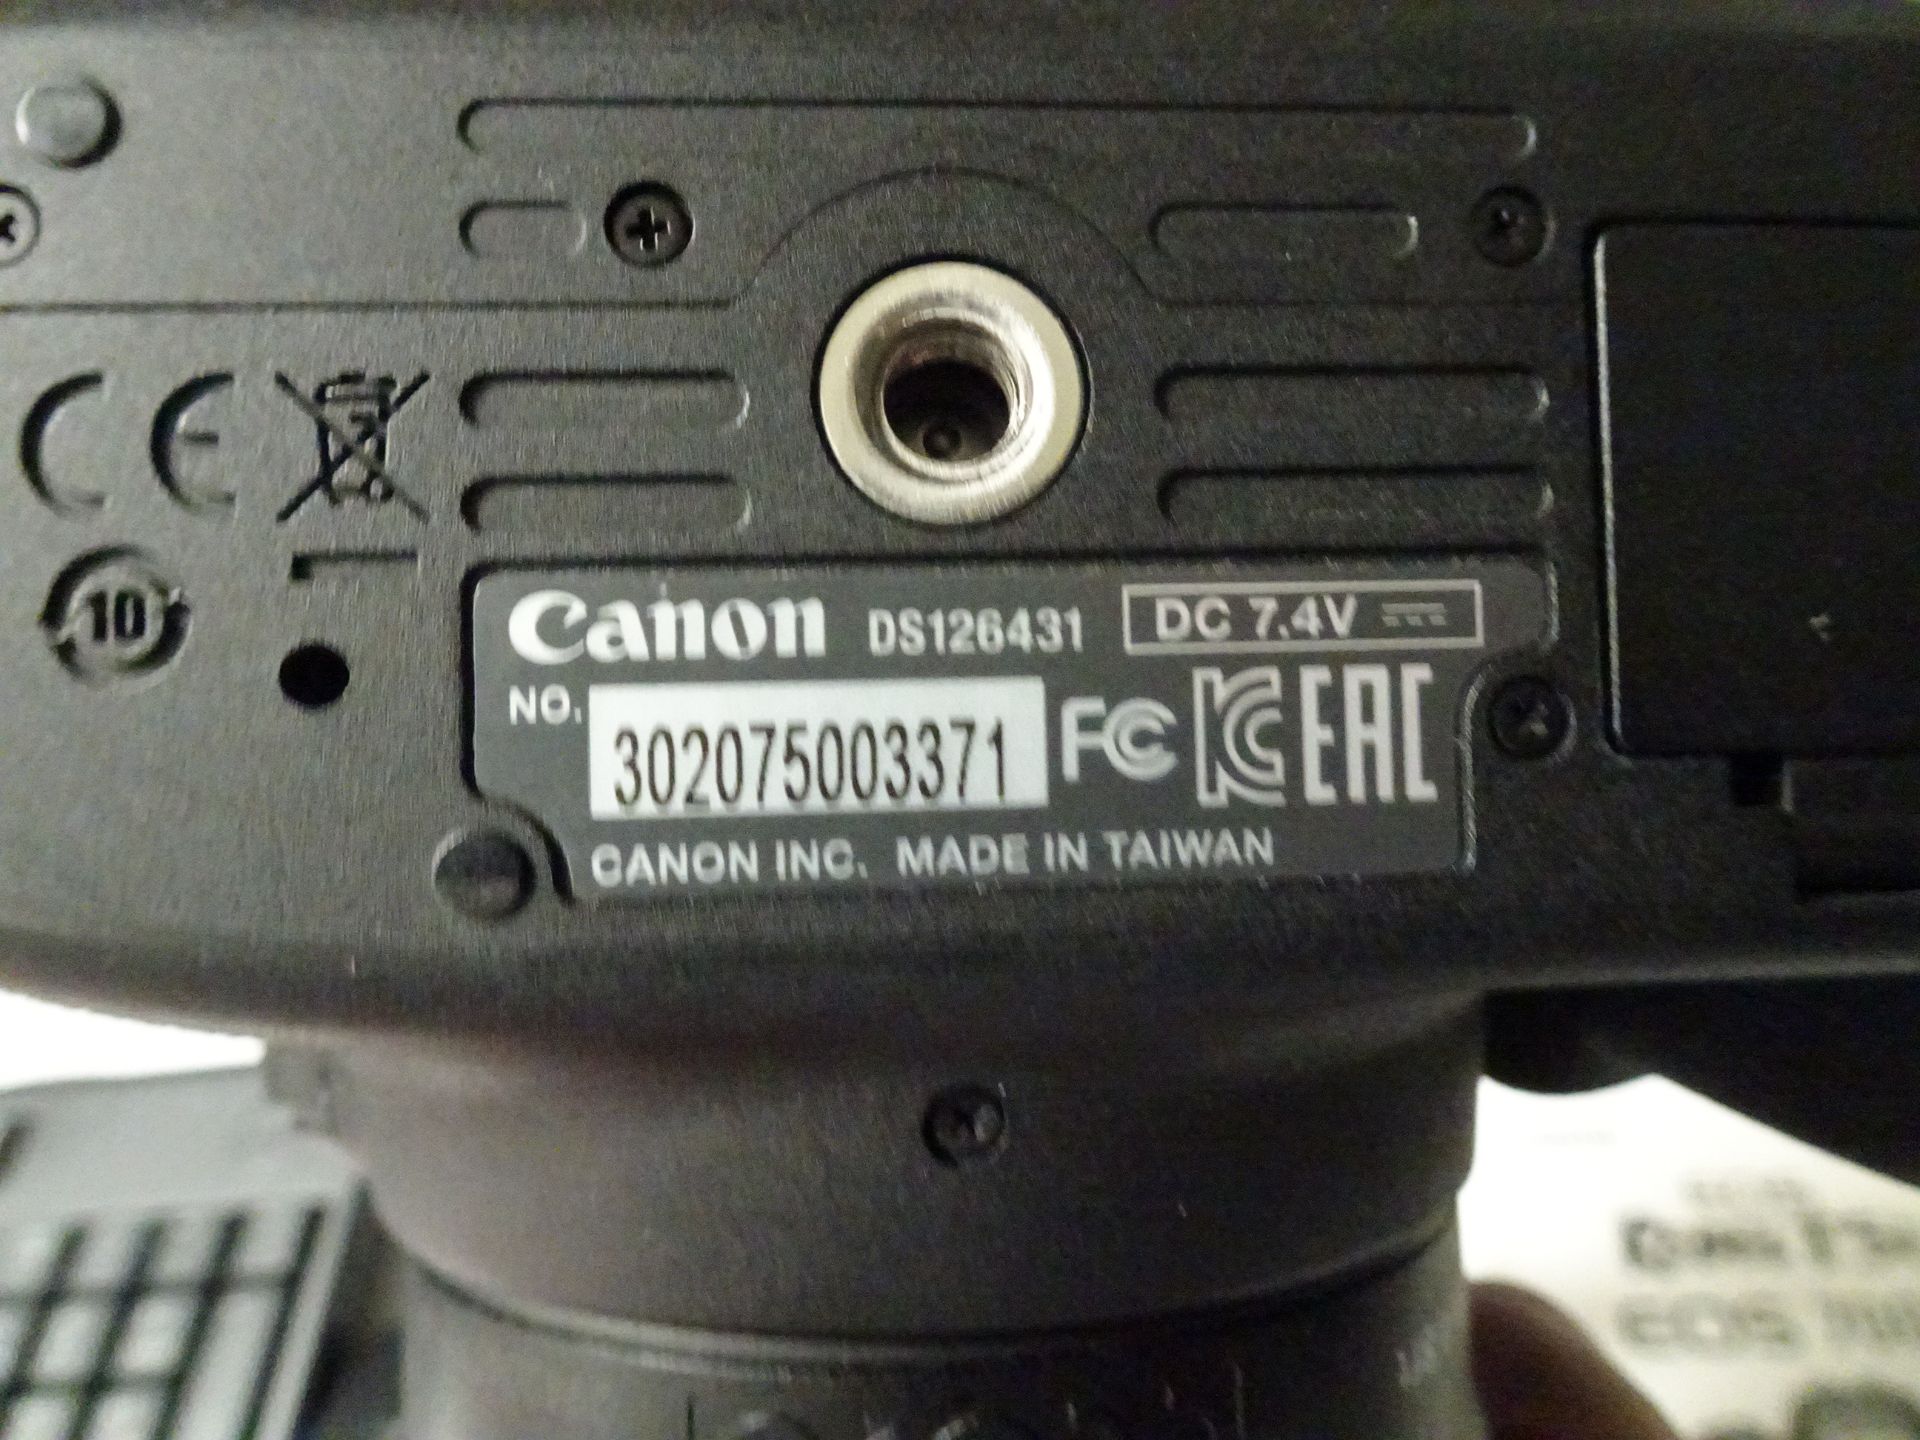 Canon EOS Rebel T5i DSLR sn 302075003371 w/ Canon EF-S 18-55mm 1:3.5-5.6 IS STM /58mm Lens, (2) - Image 13 of 15